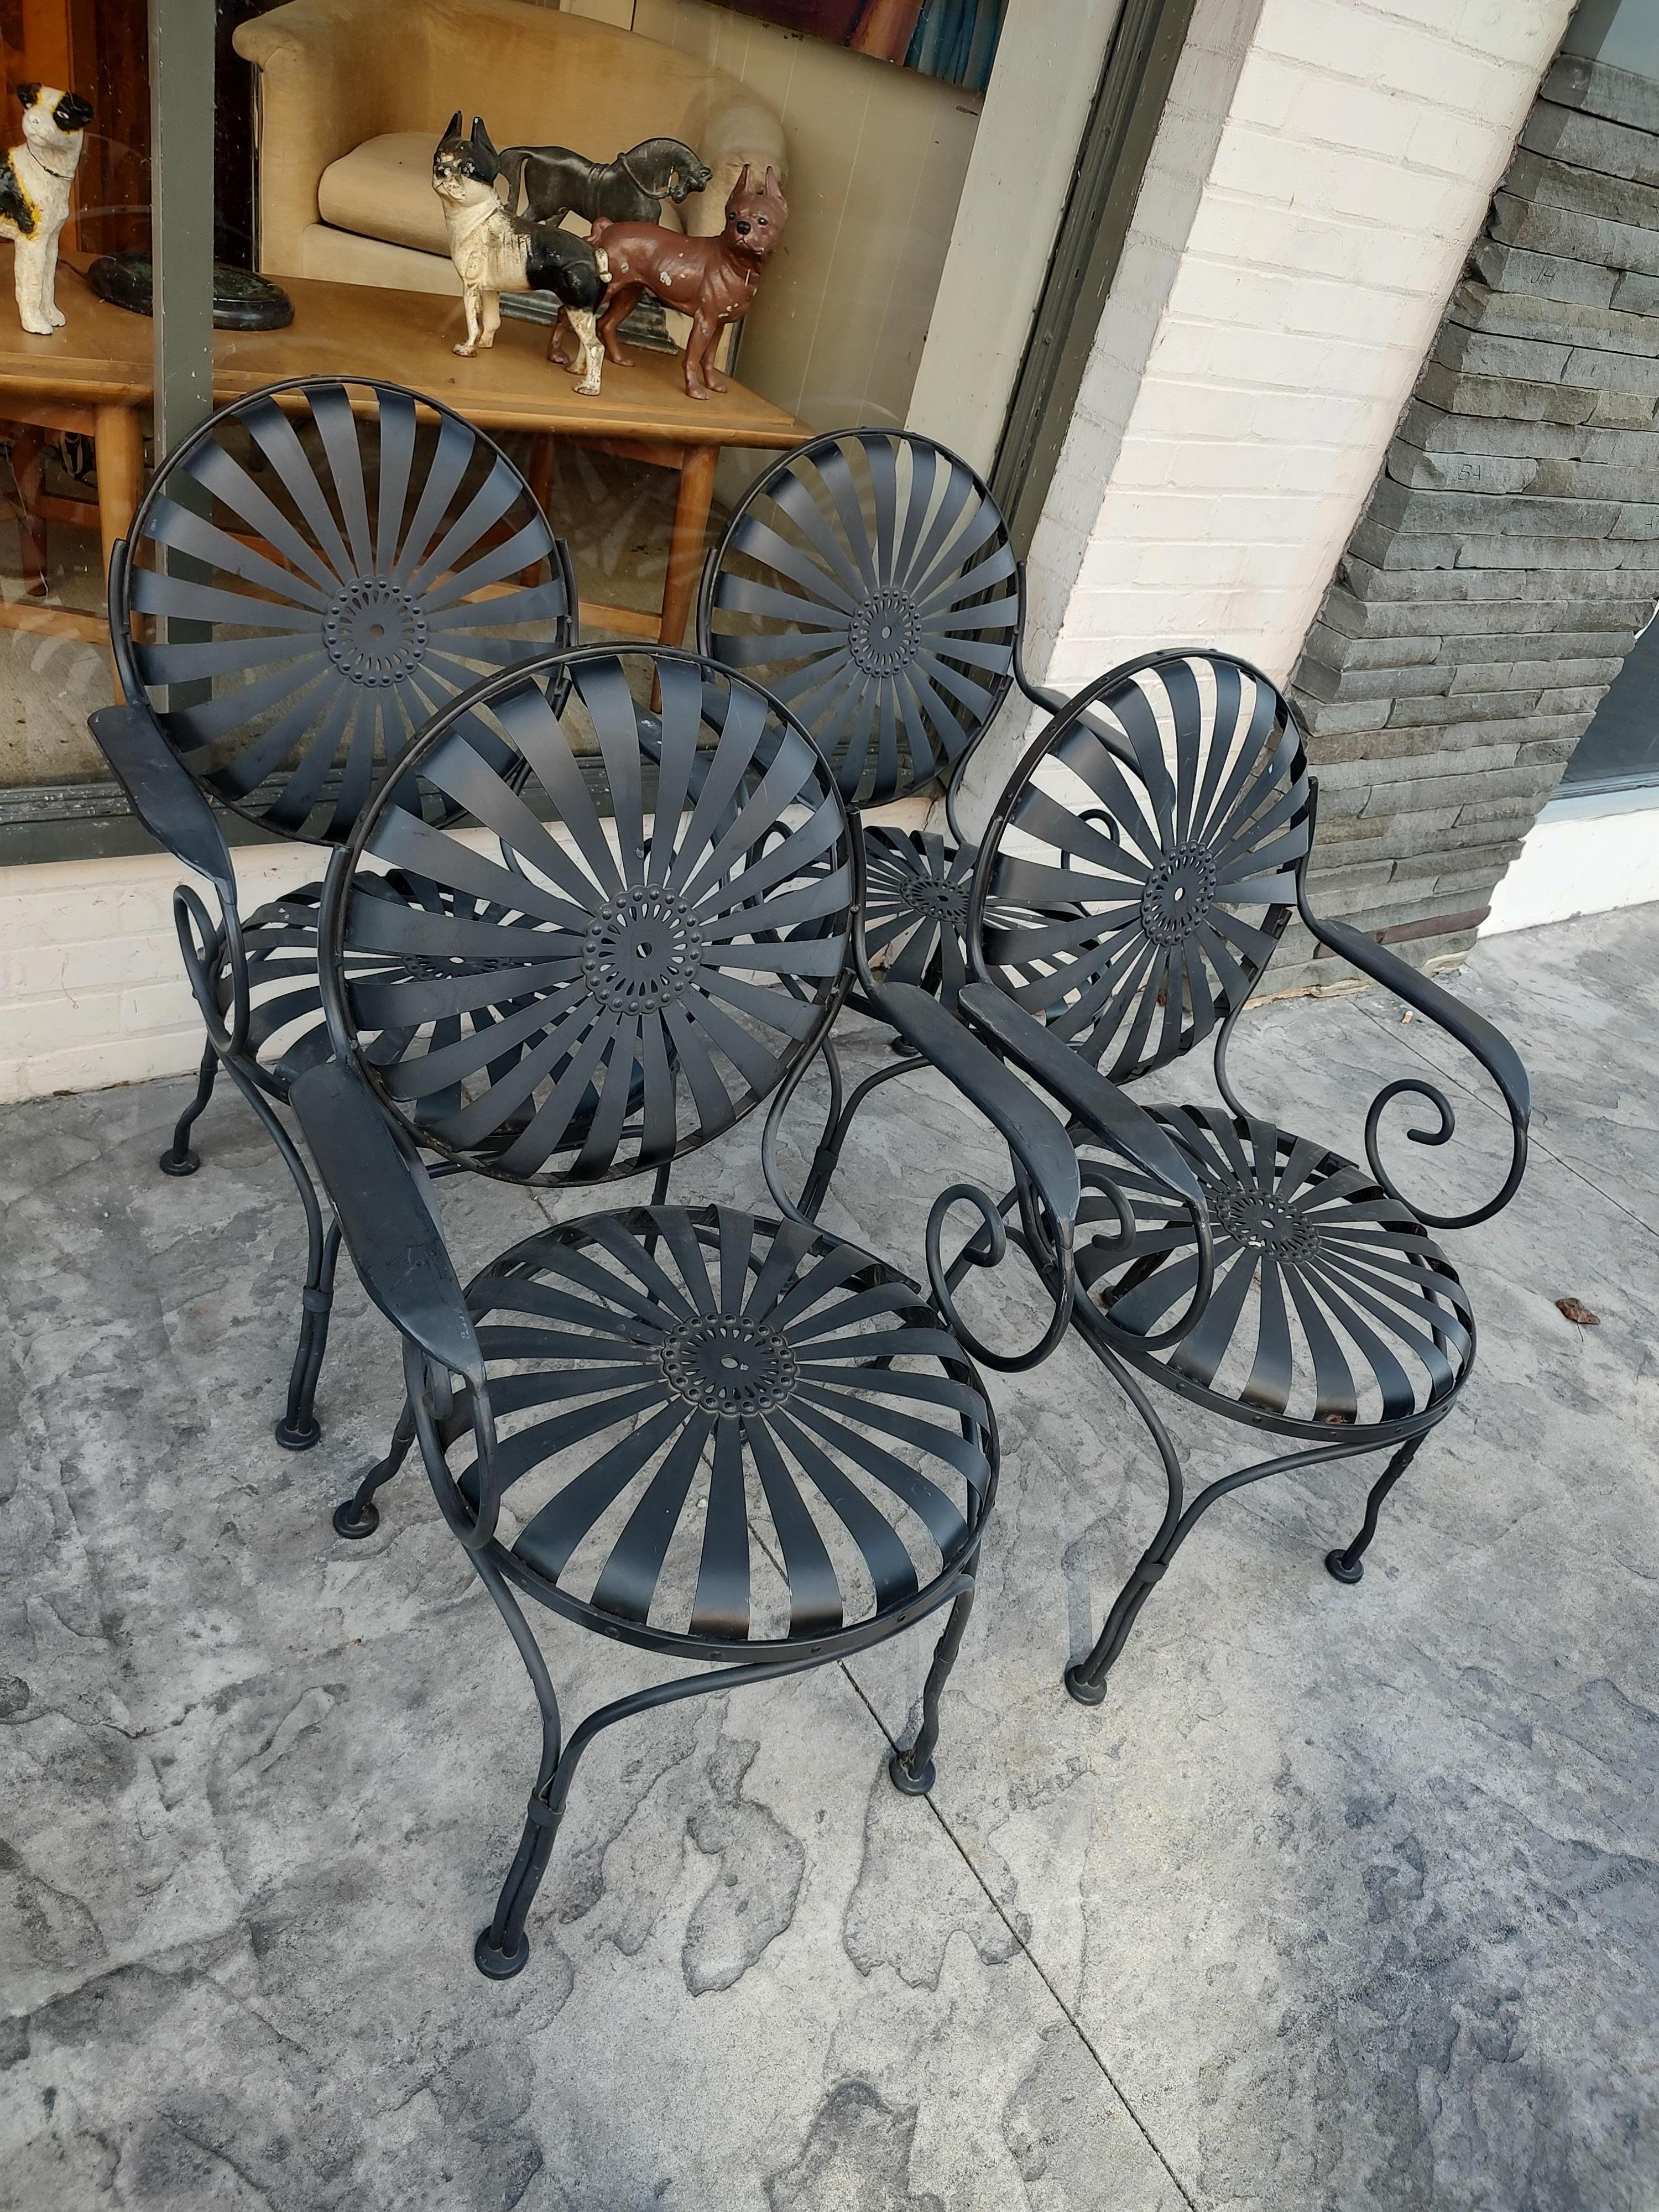 Steel Set of 4 Iron Spring Seat Sunburst Sunflower Chairs, C1960